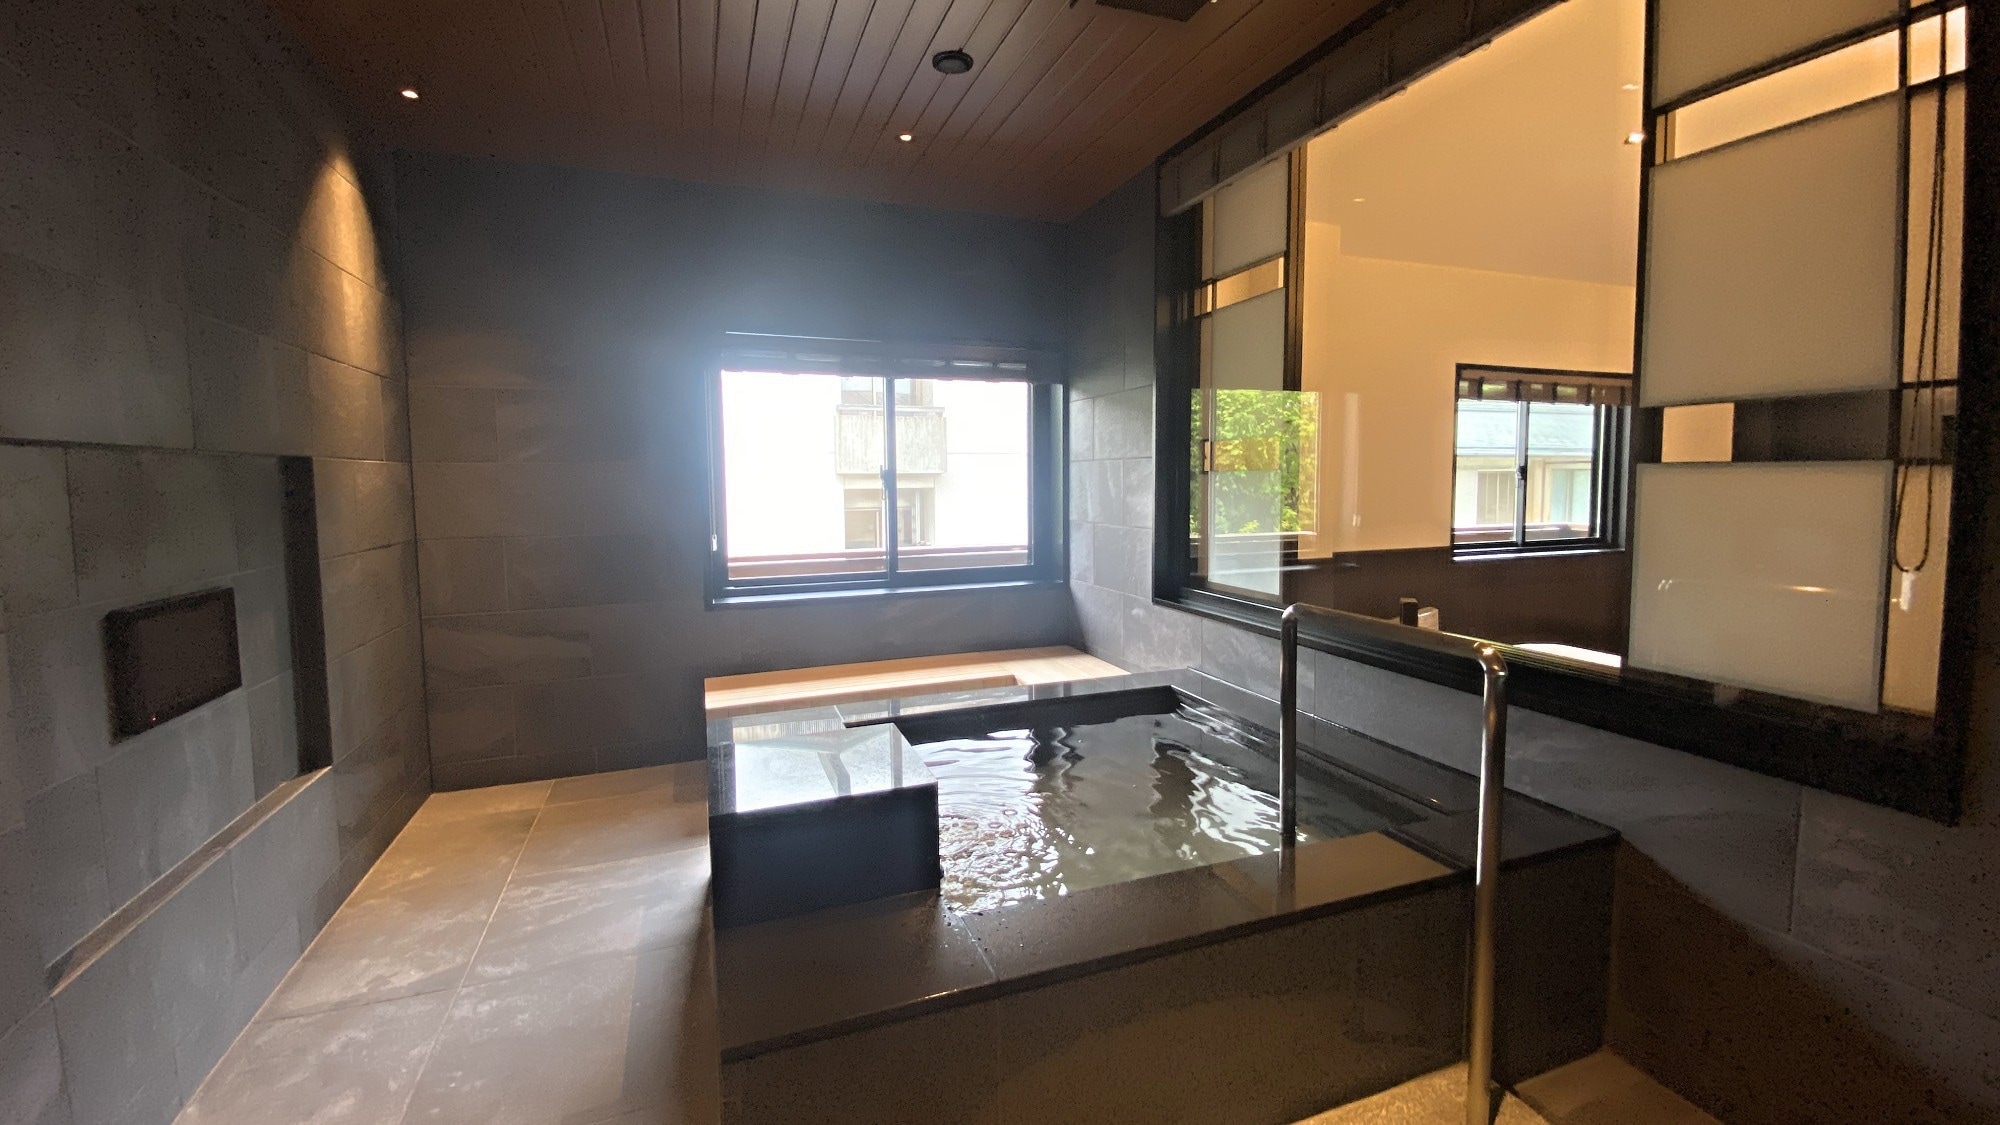 [Dengan pemandian air panas] Kamar bergaya Jepang-Barat / Kamar mandi di mana Anda dapat menikmati pemandian air panas di kamar tamu (contoh kamar tamu)